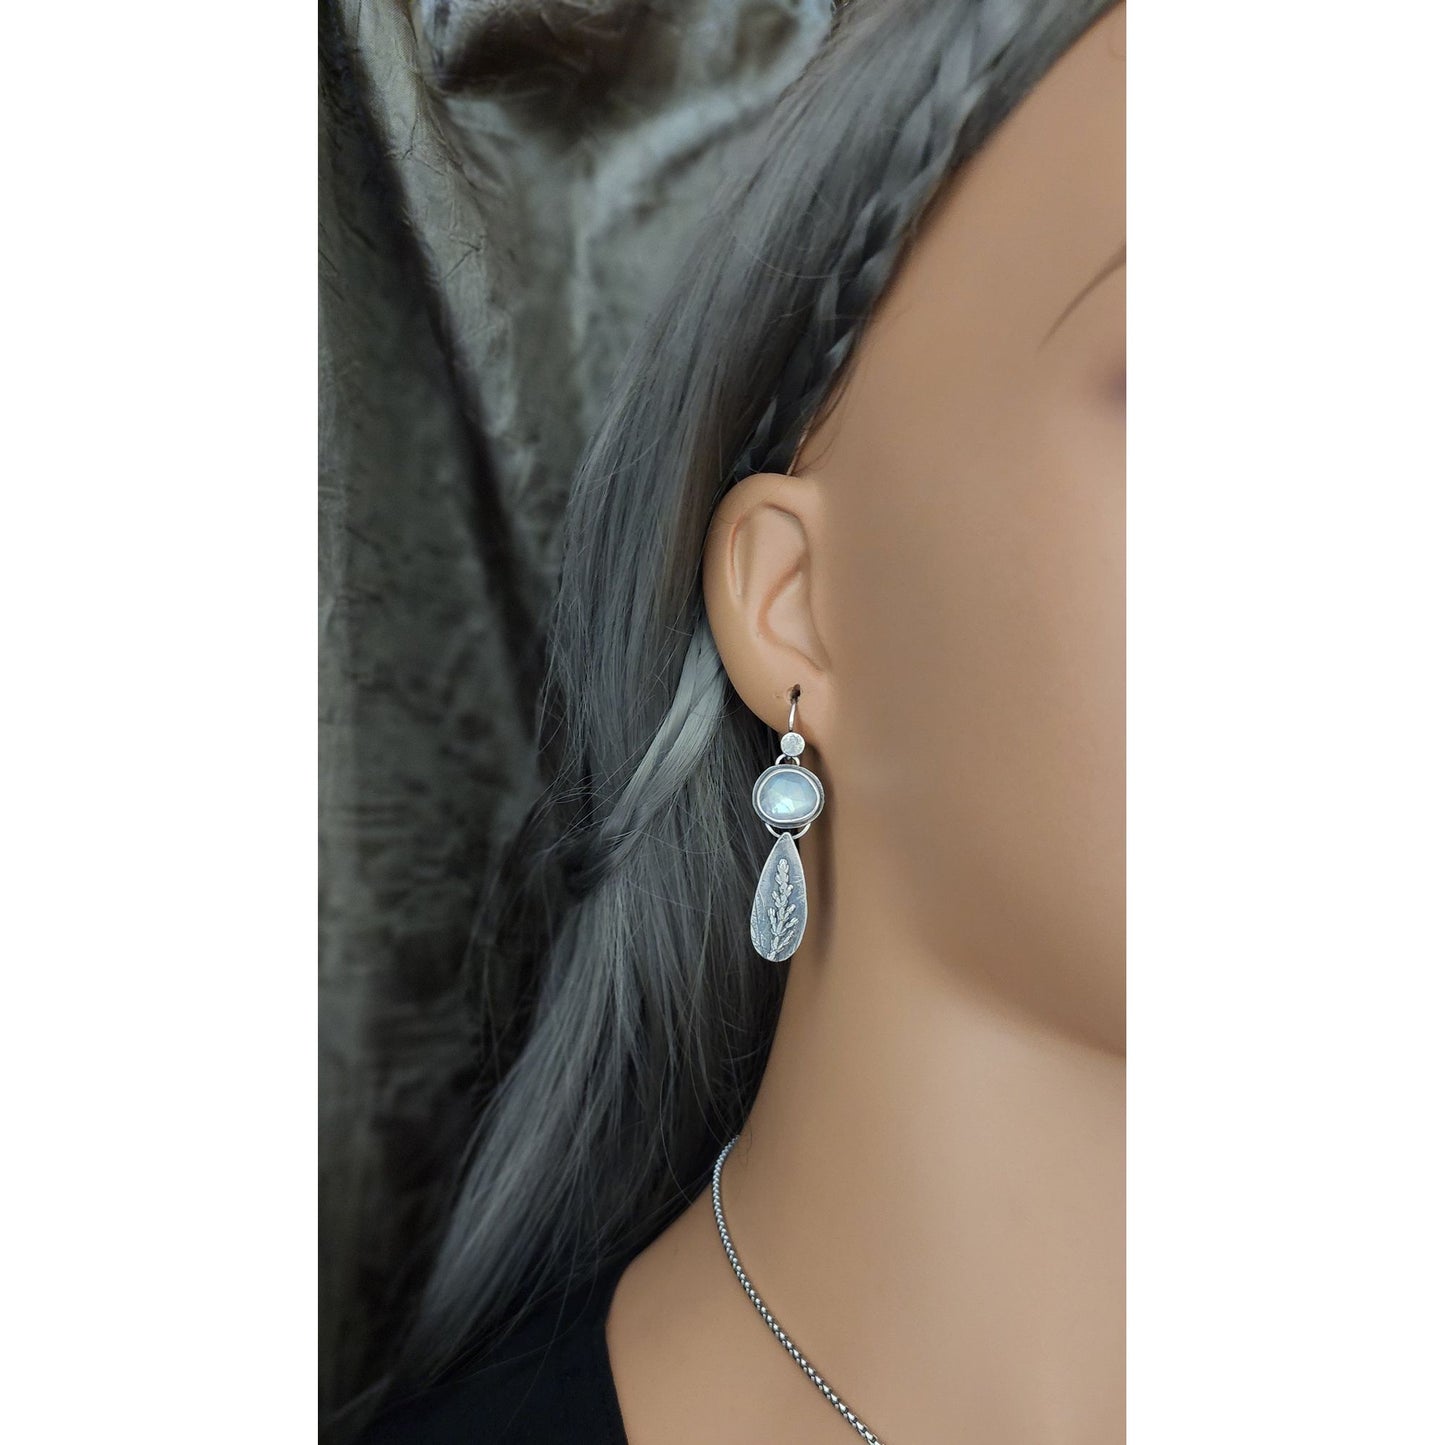 Ice Queen earrings